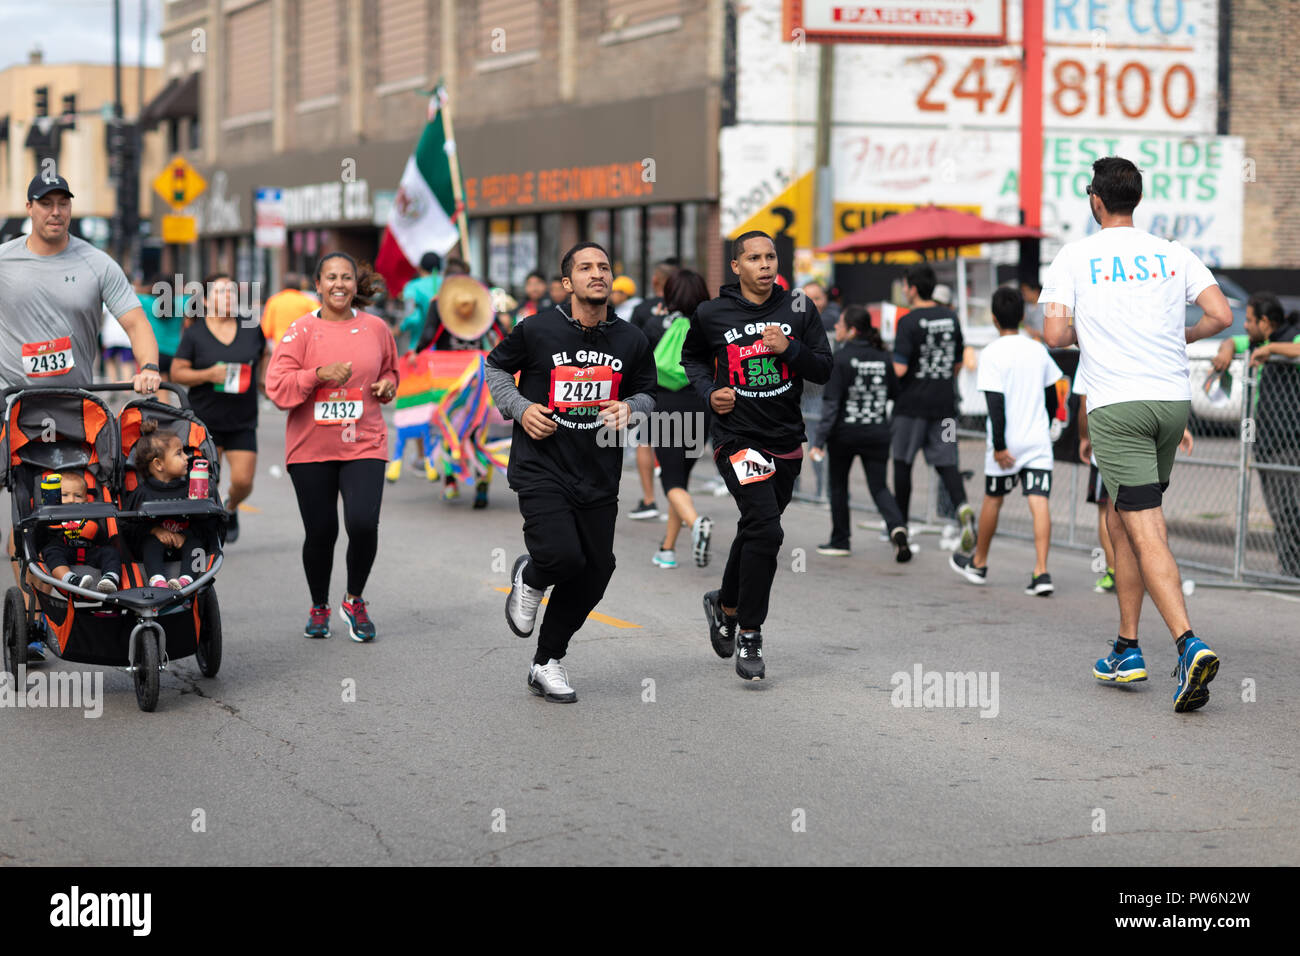 Chicago, Illinois , USA - September 9, 2018, El Grito 5K at la Villita, family run walk, men and women running in the annual 5 kilometers race, prior  Stock Photo